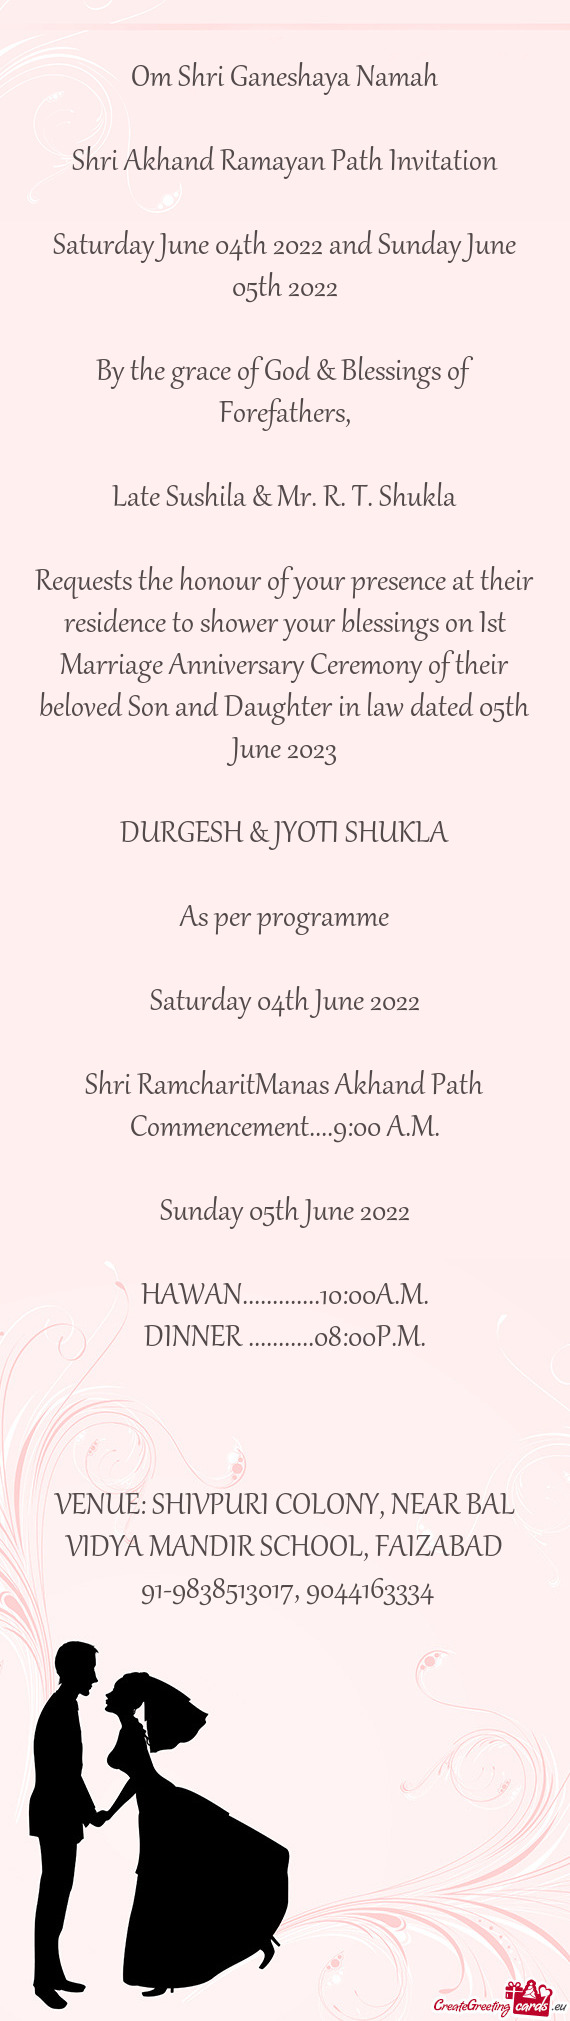 Shri Akhand Ramayan Path Invitation